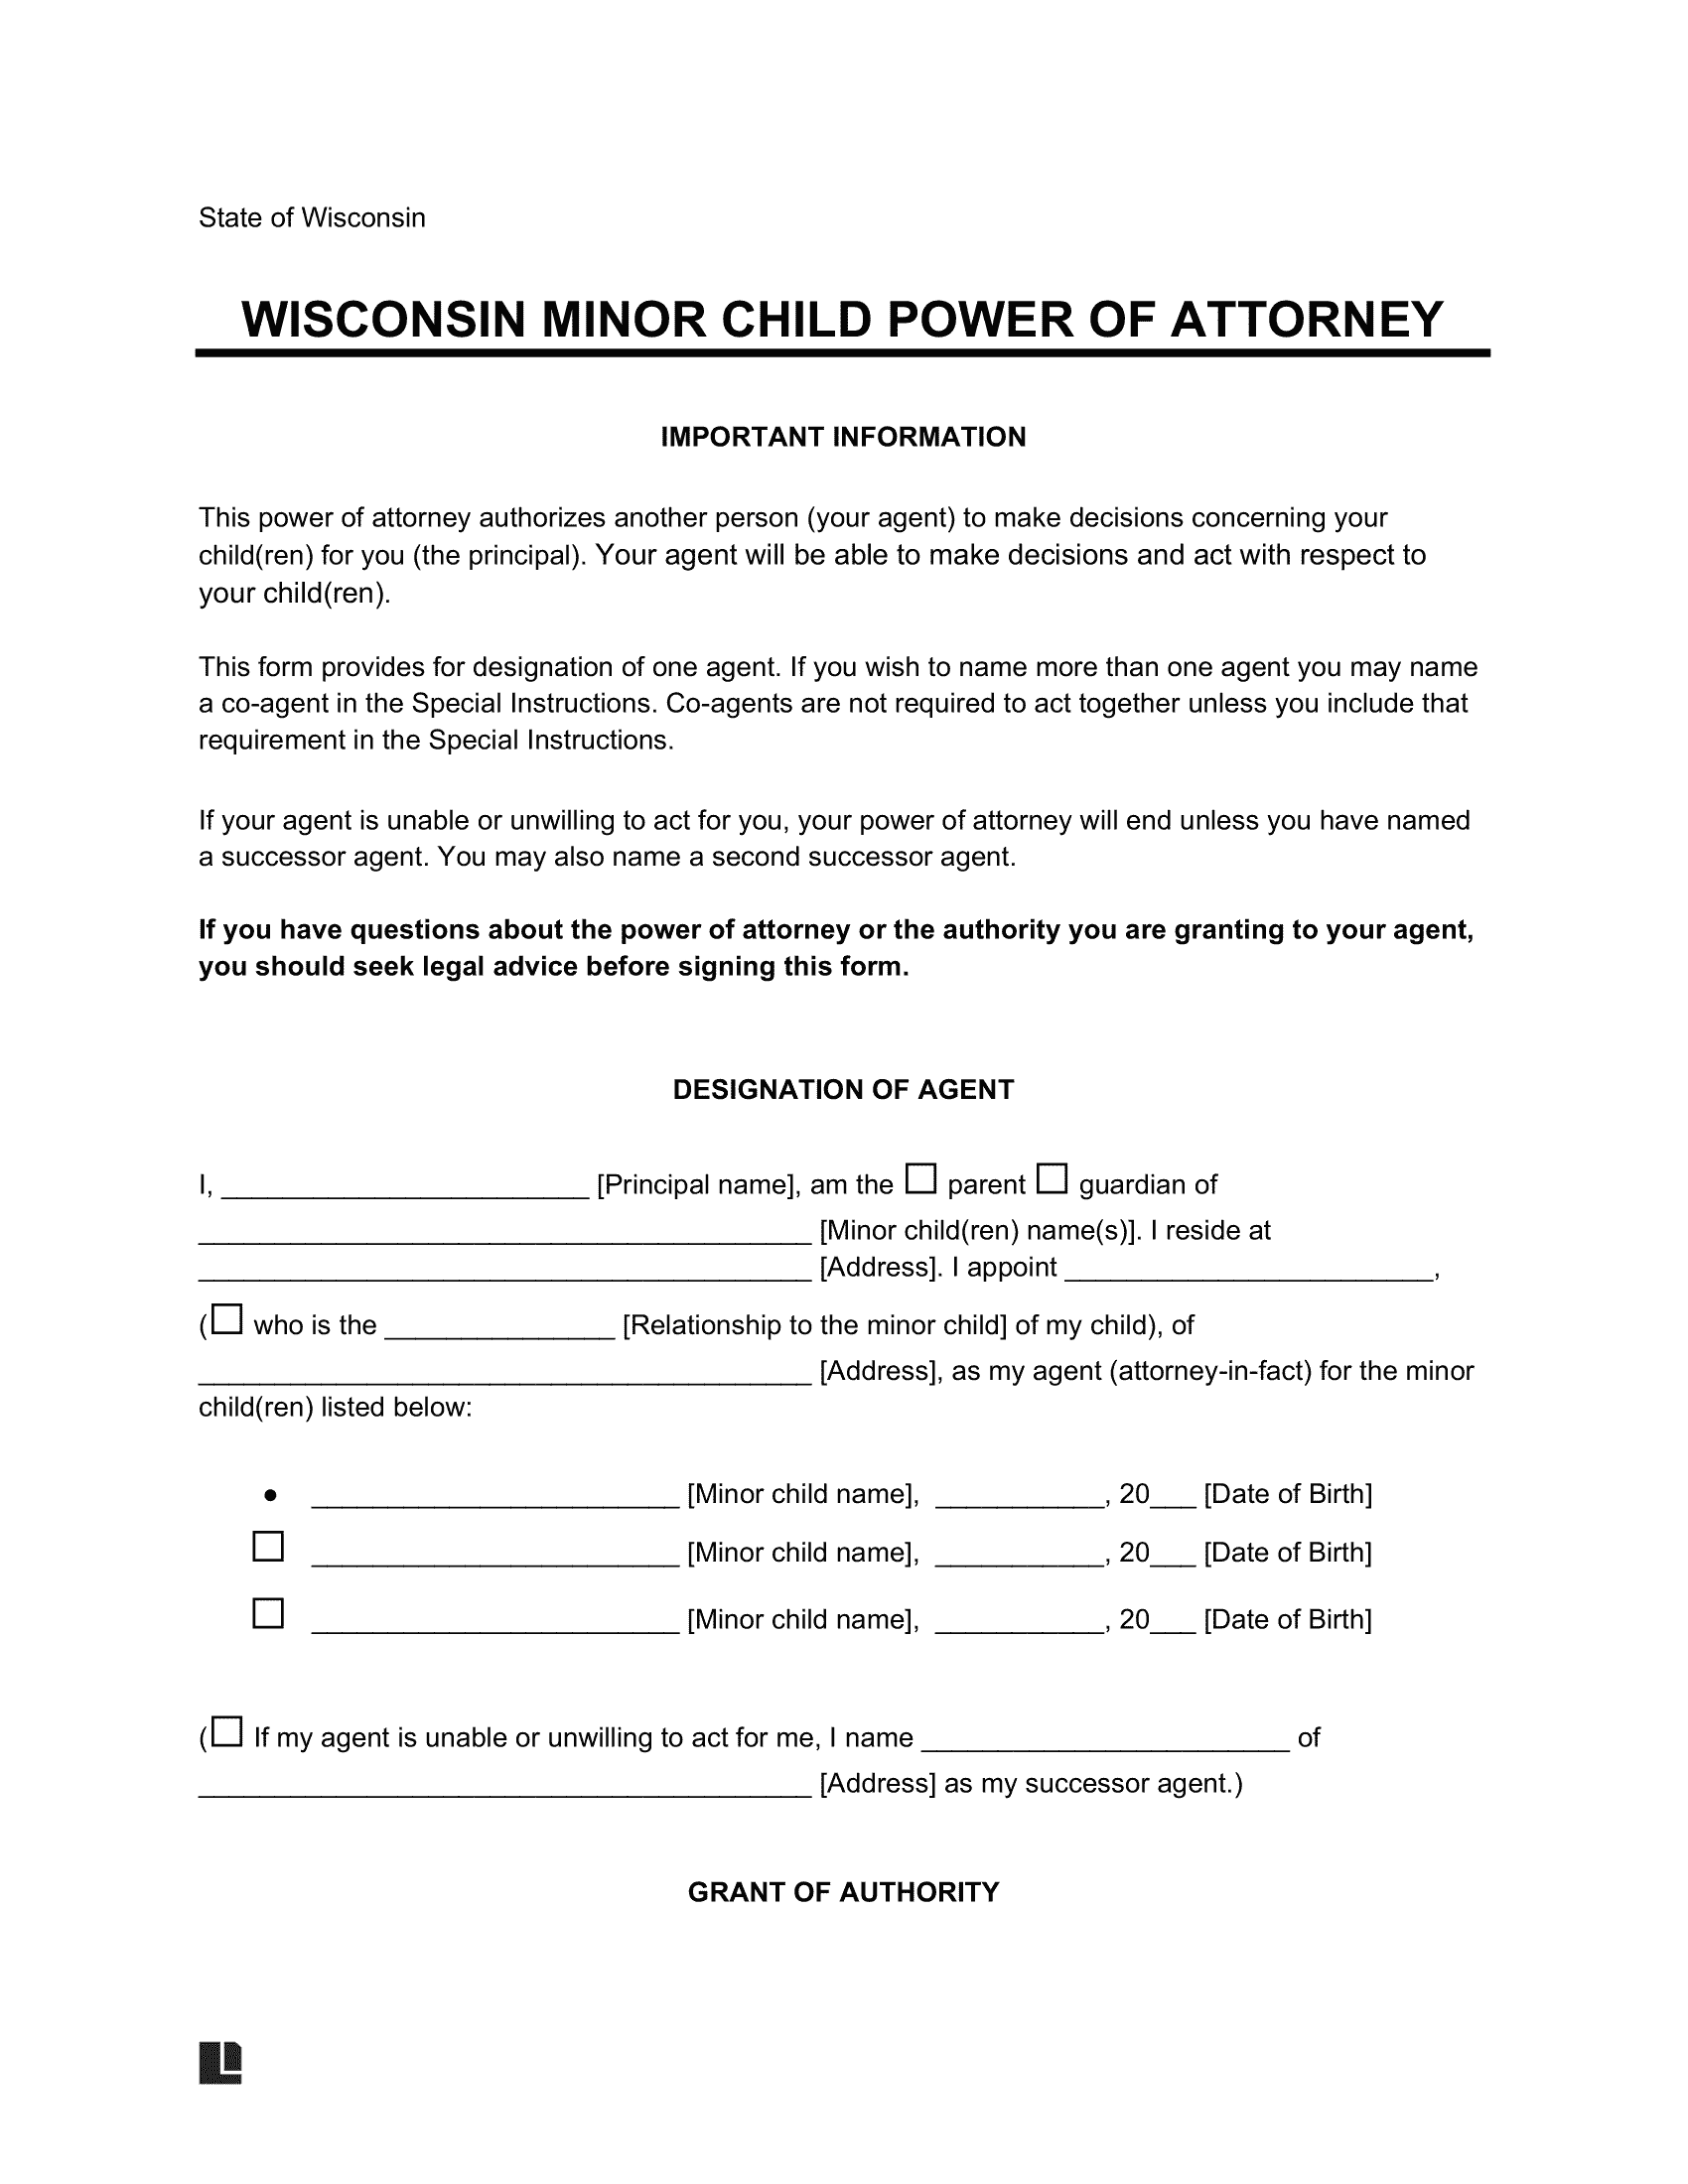 Wisconsin Minor Child Power of Attorney Form